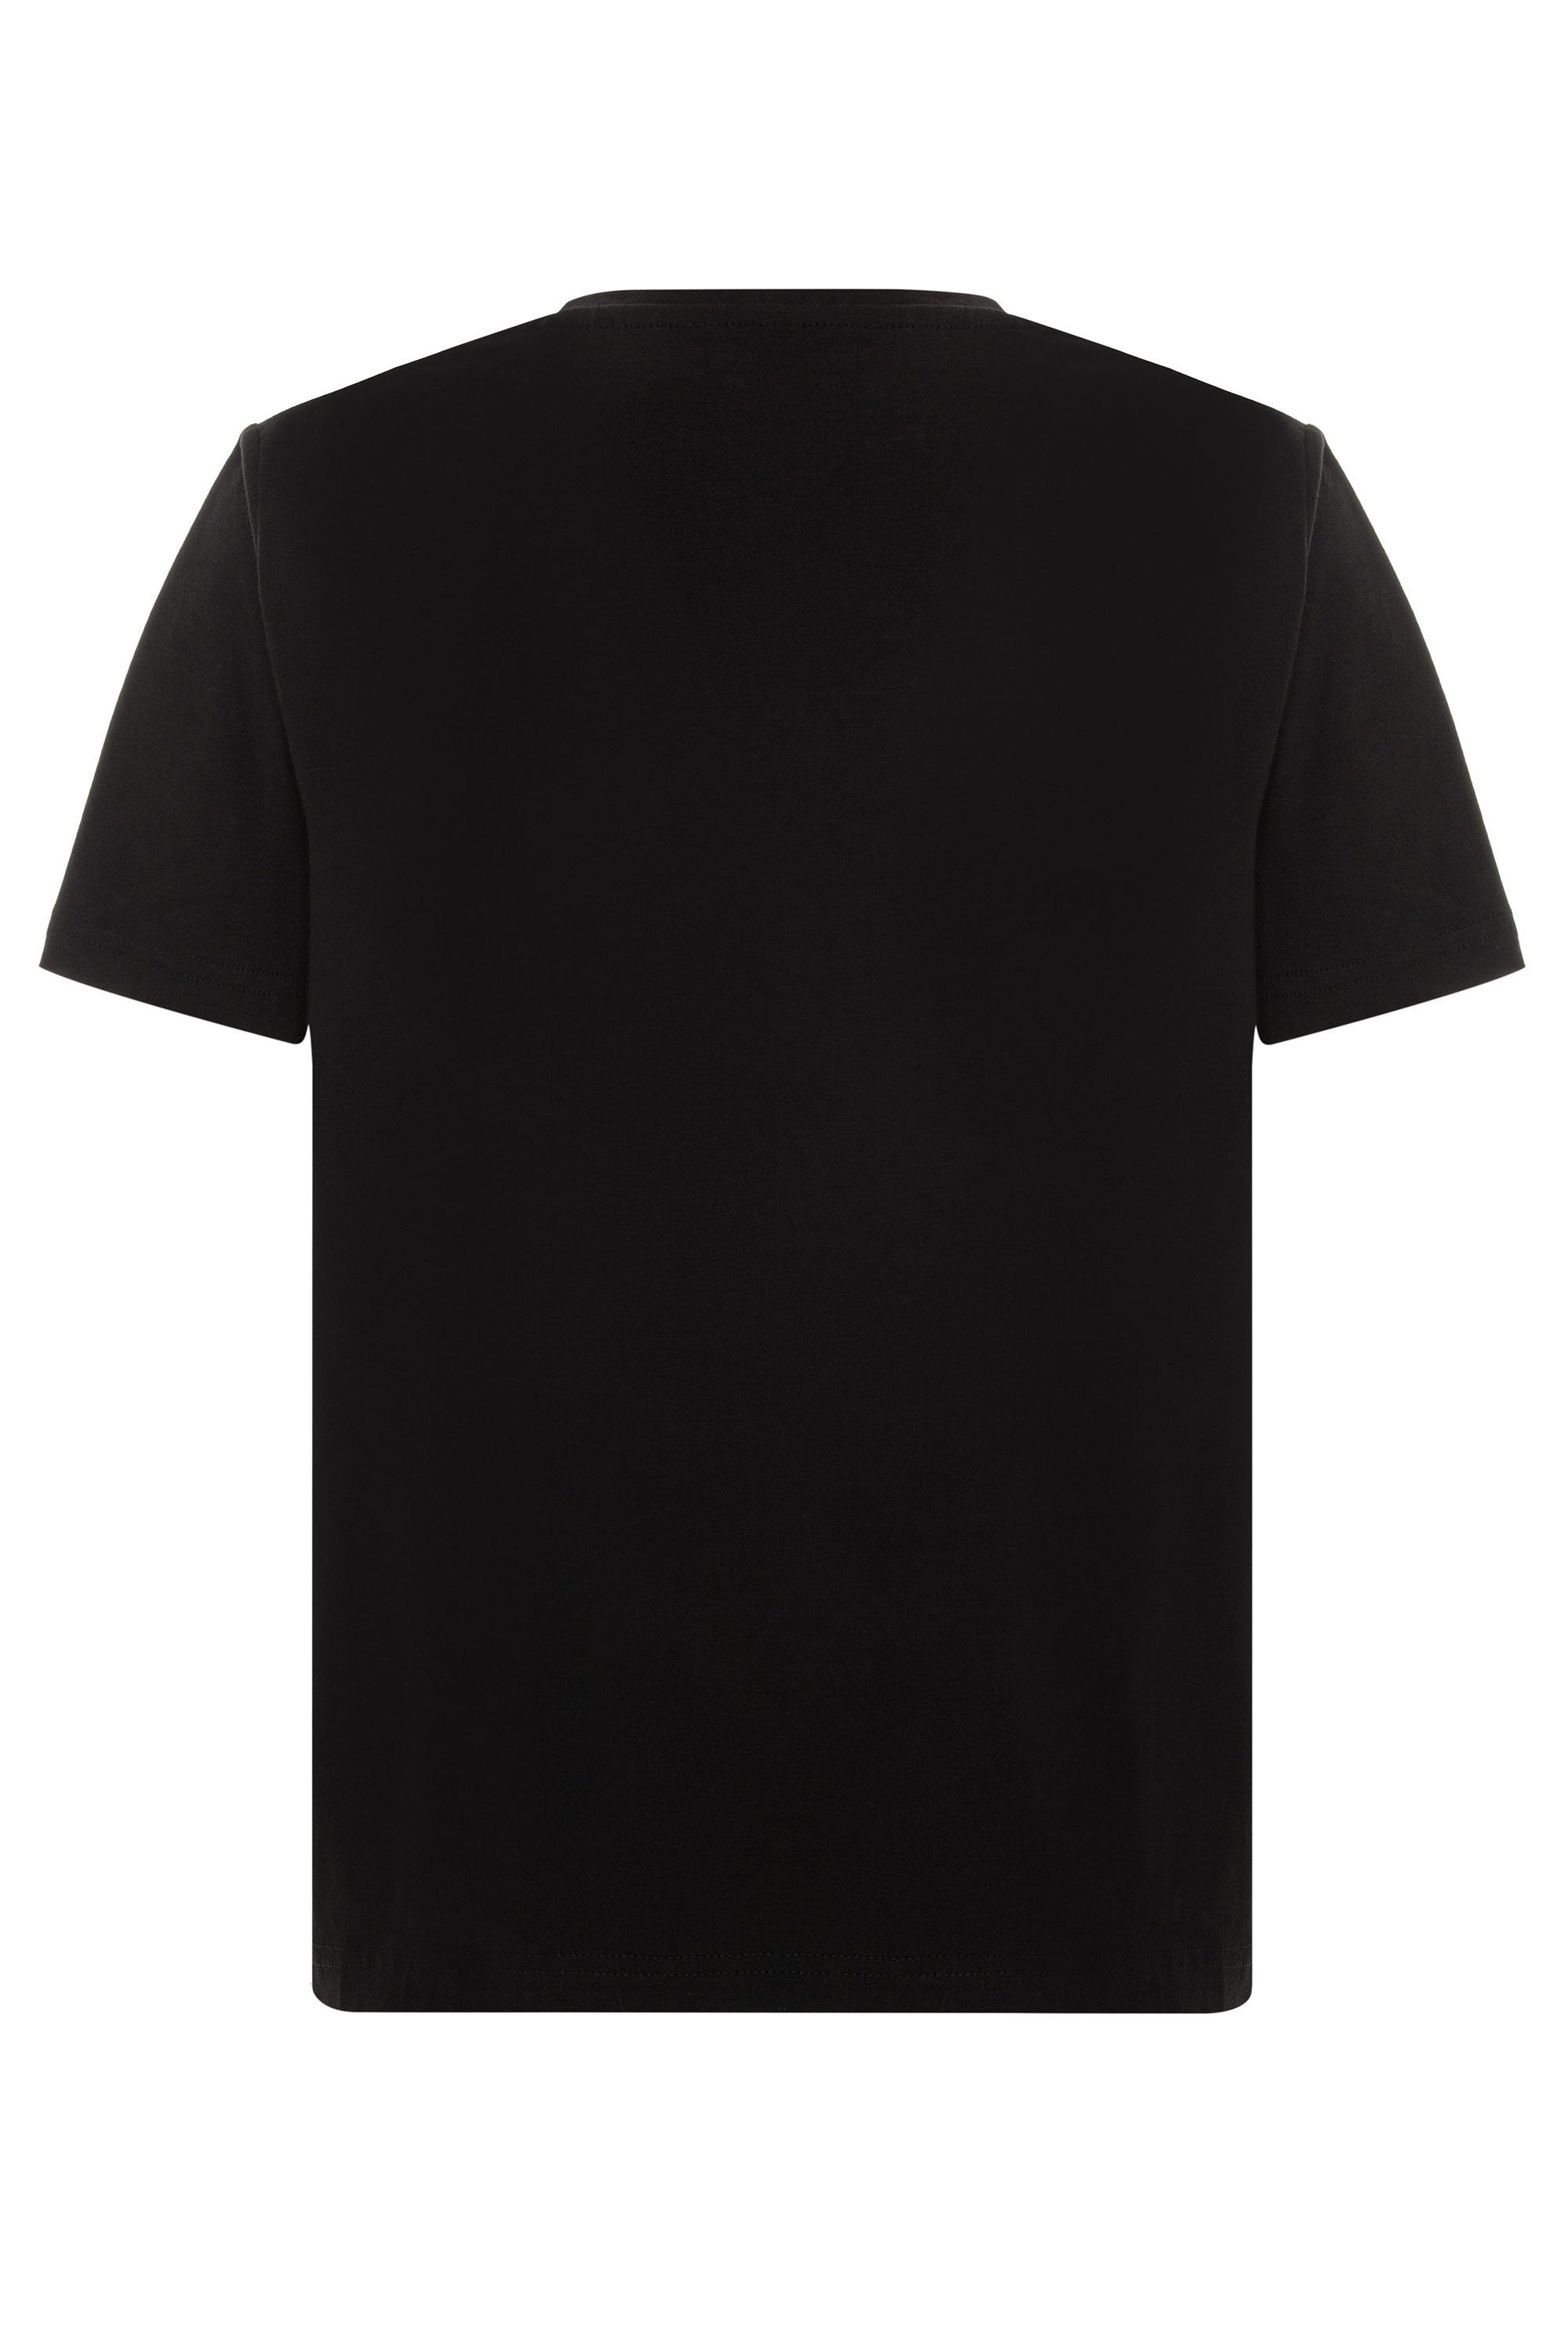 Cipo & Baxx T-Shirt mit coolem Print schwarz-weiß